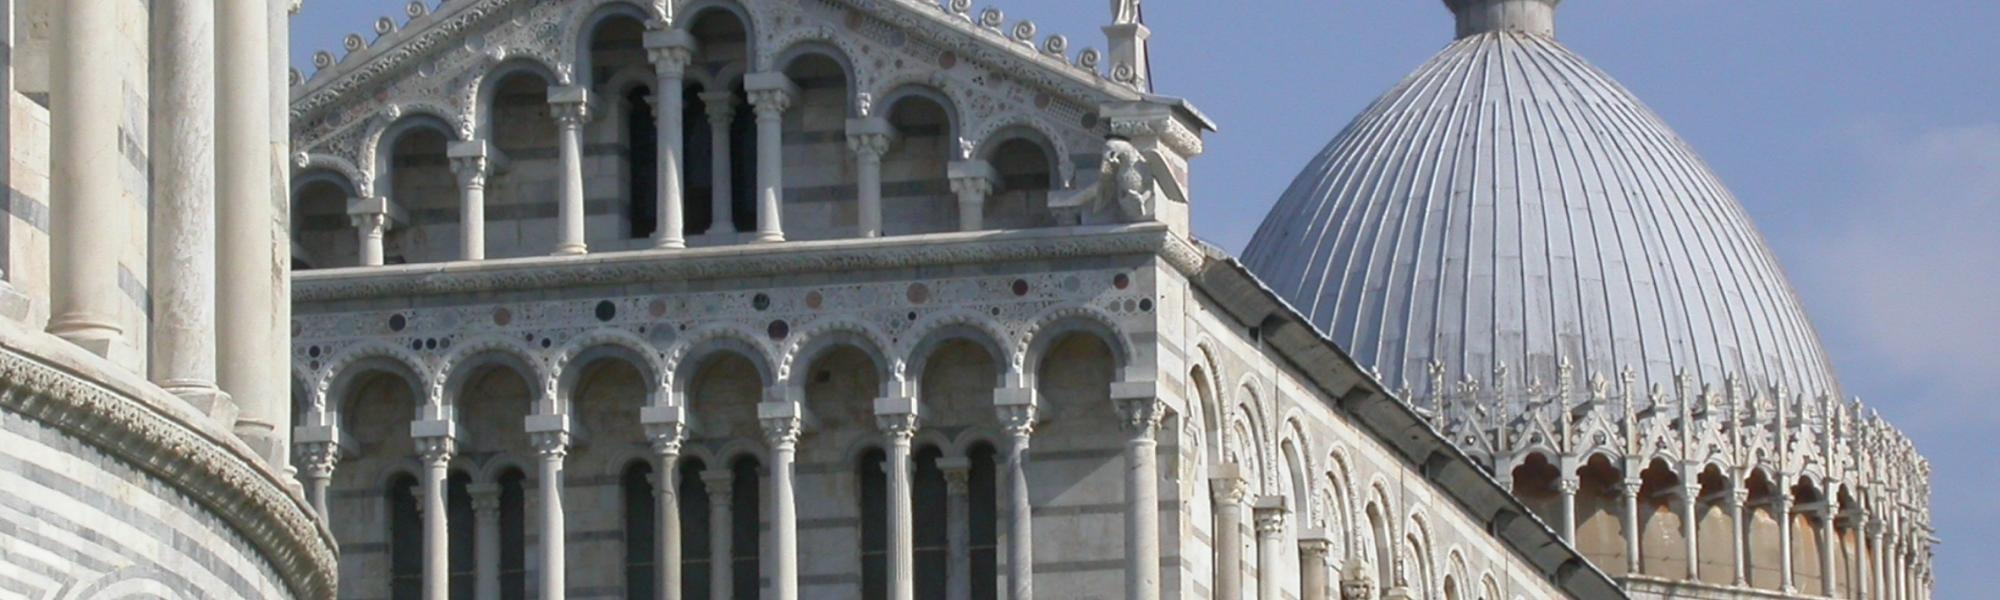 La Torre di Pisa (Opera Primaziale Pisana)